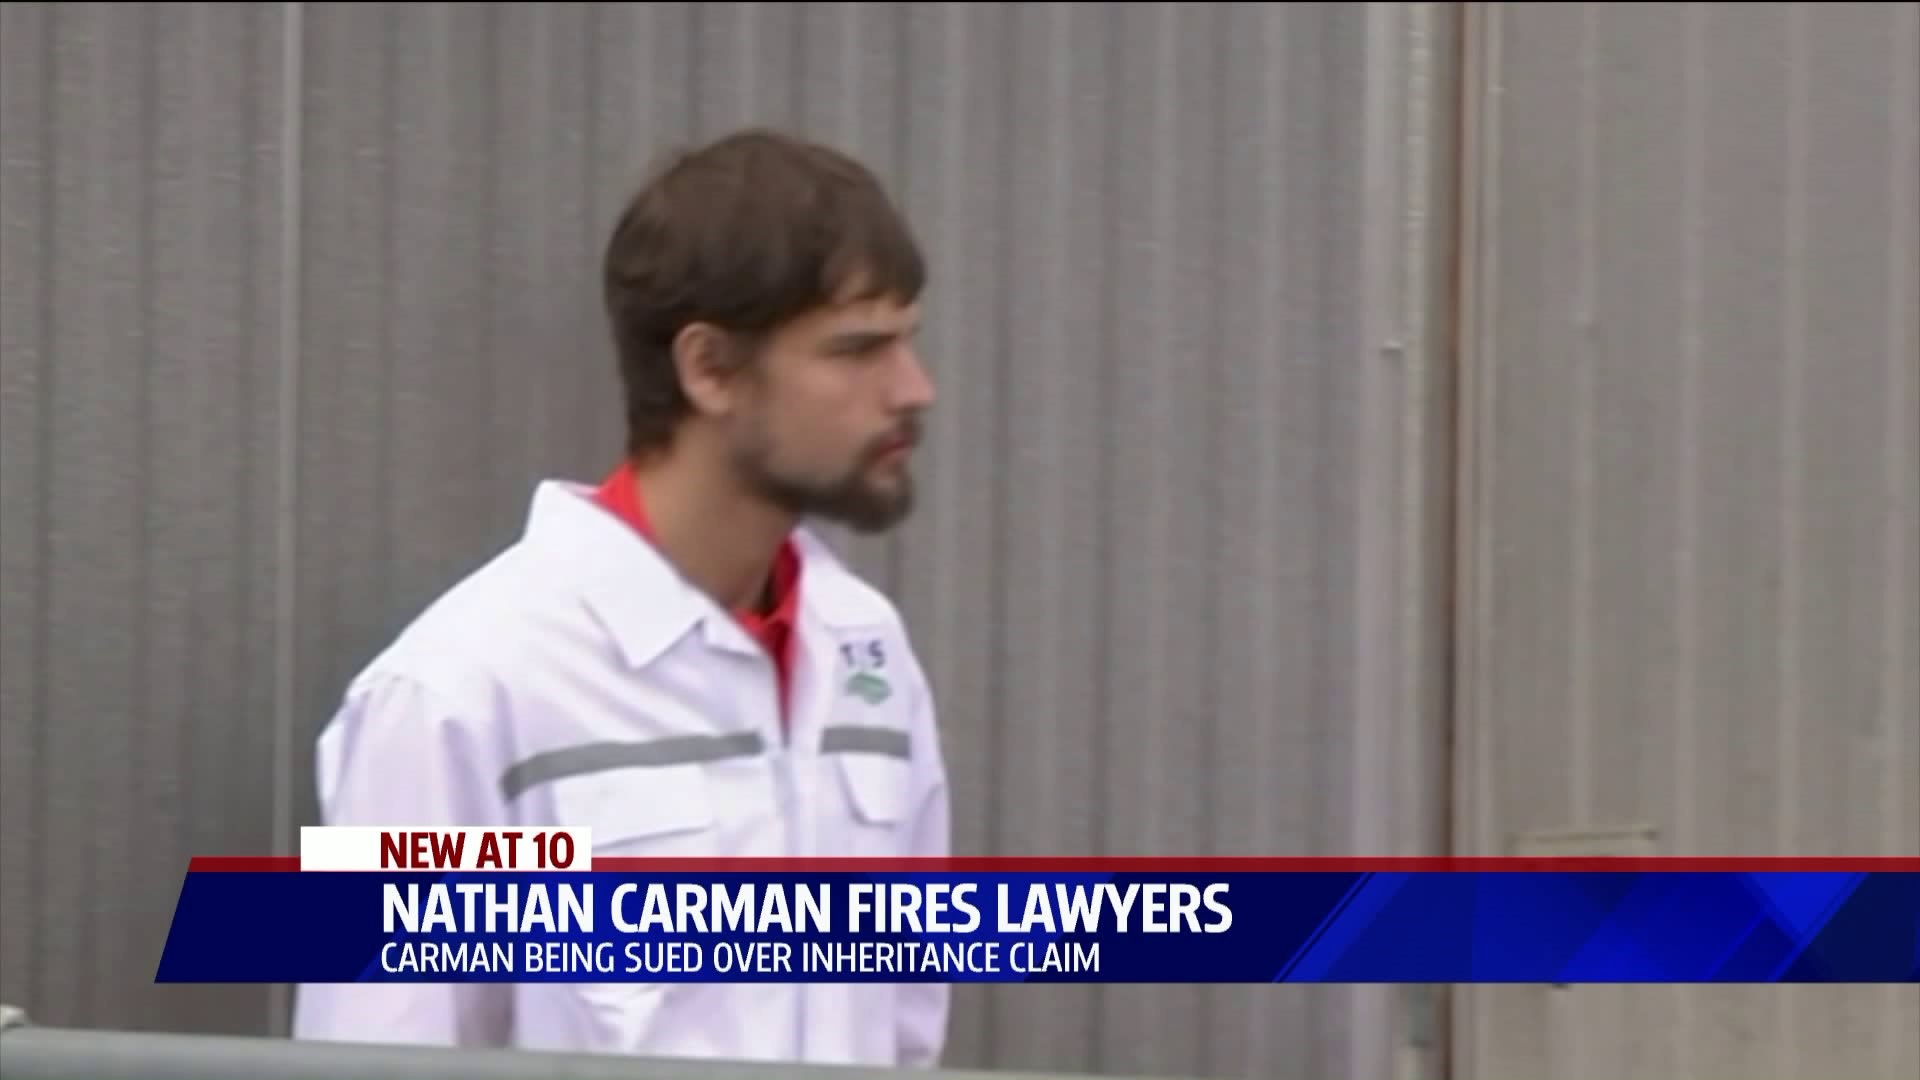 Carman fires lawyers